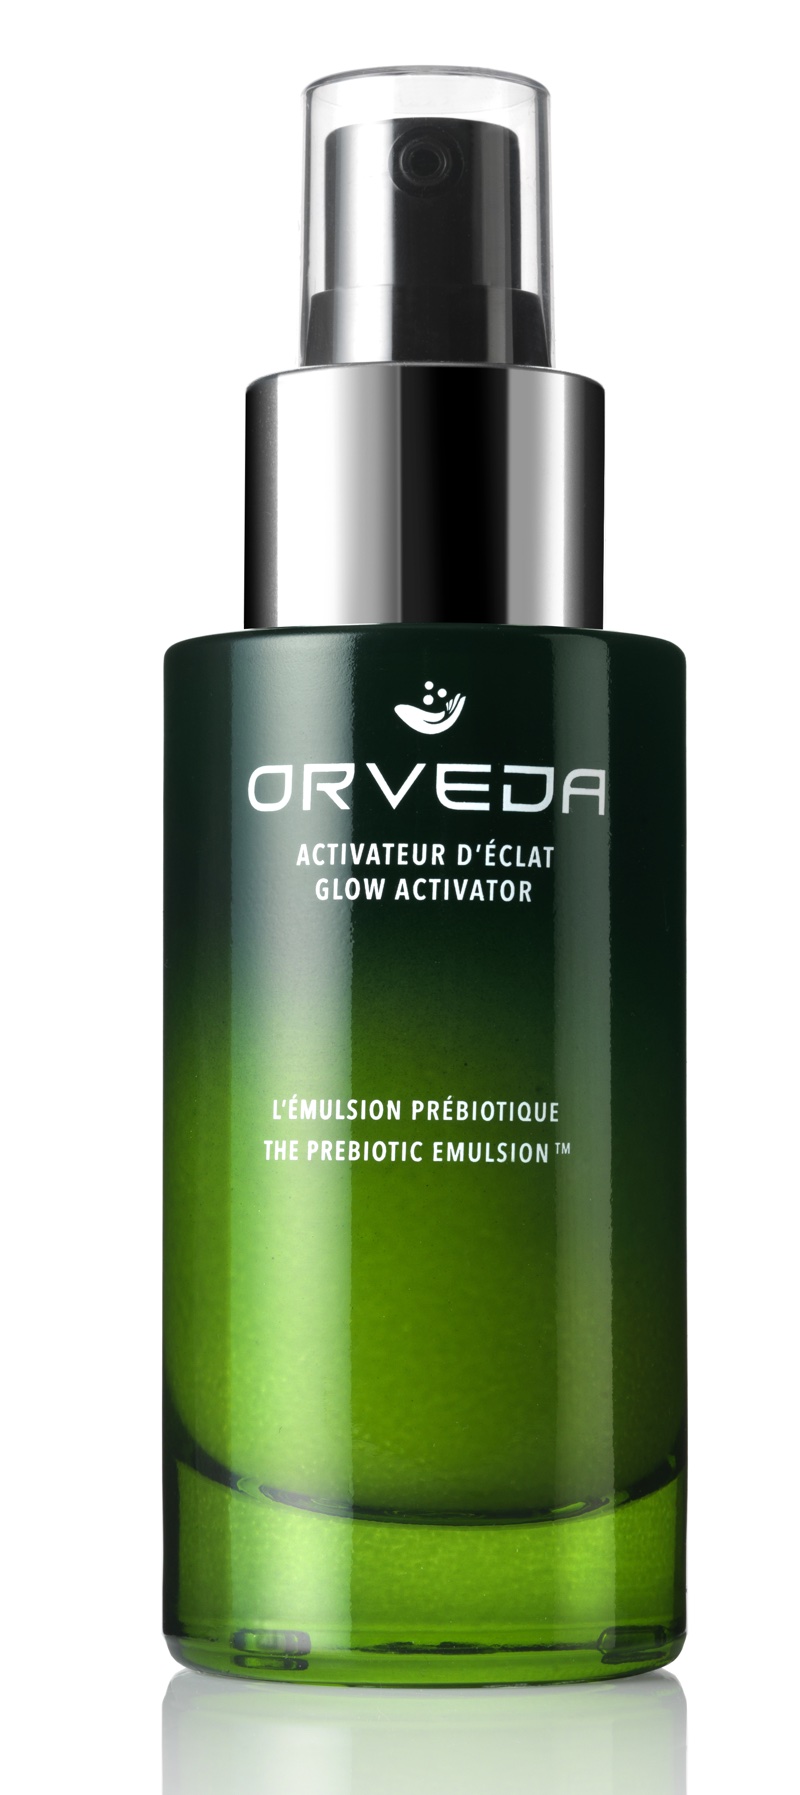 Orveda introduces new 3-in-1 hybrid moisturiser